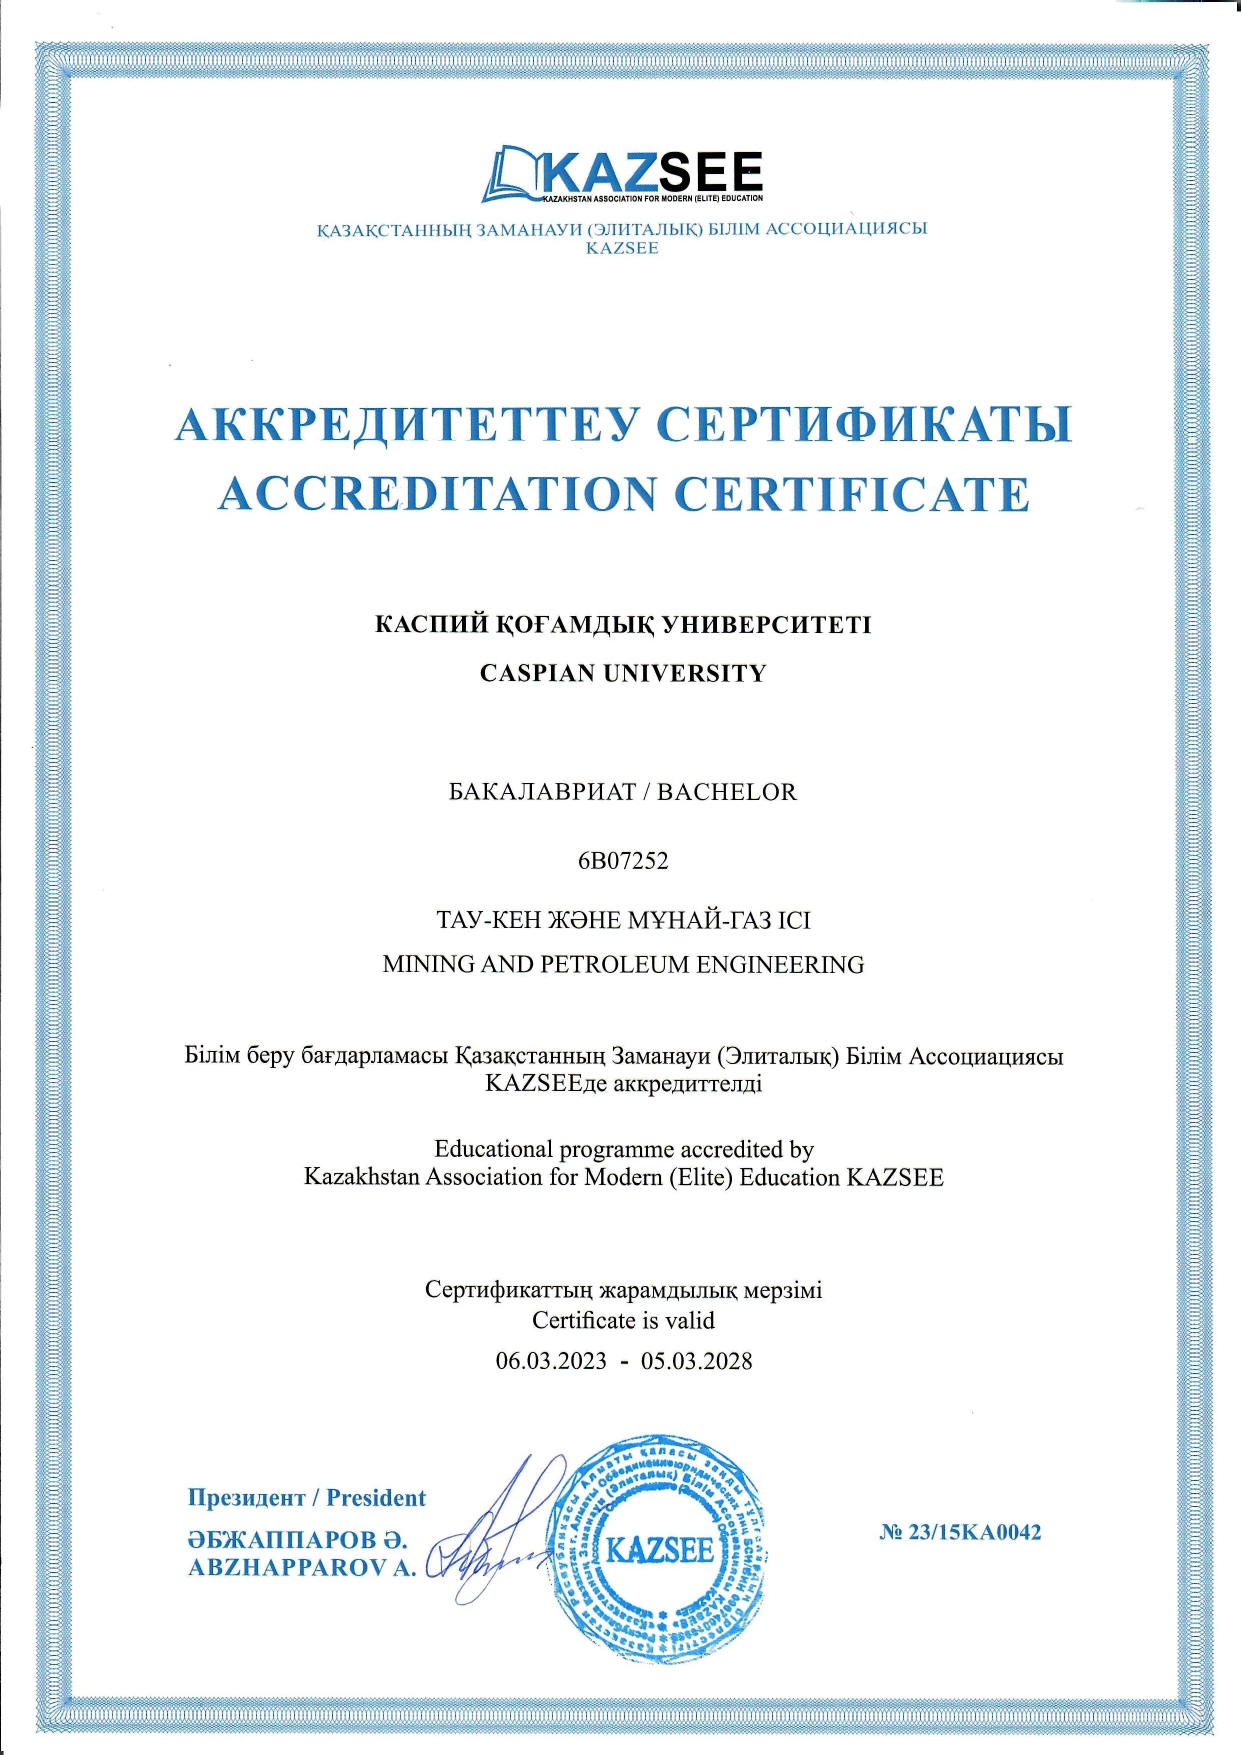 Certificate_Caspian university (1) (1)_page-0004